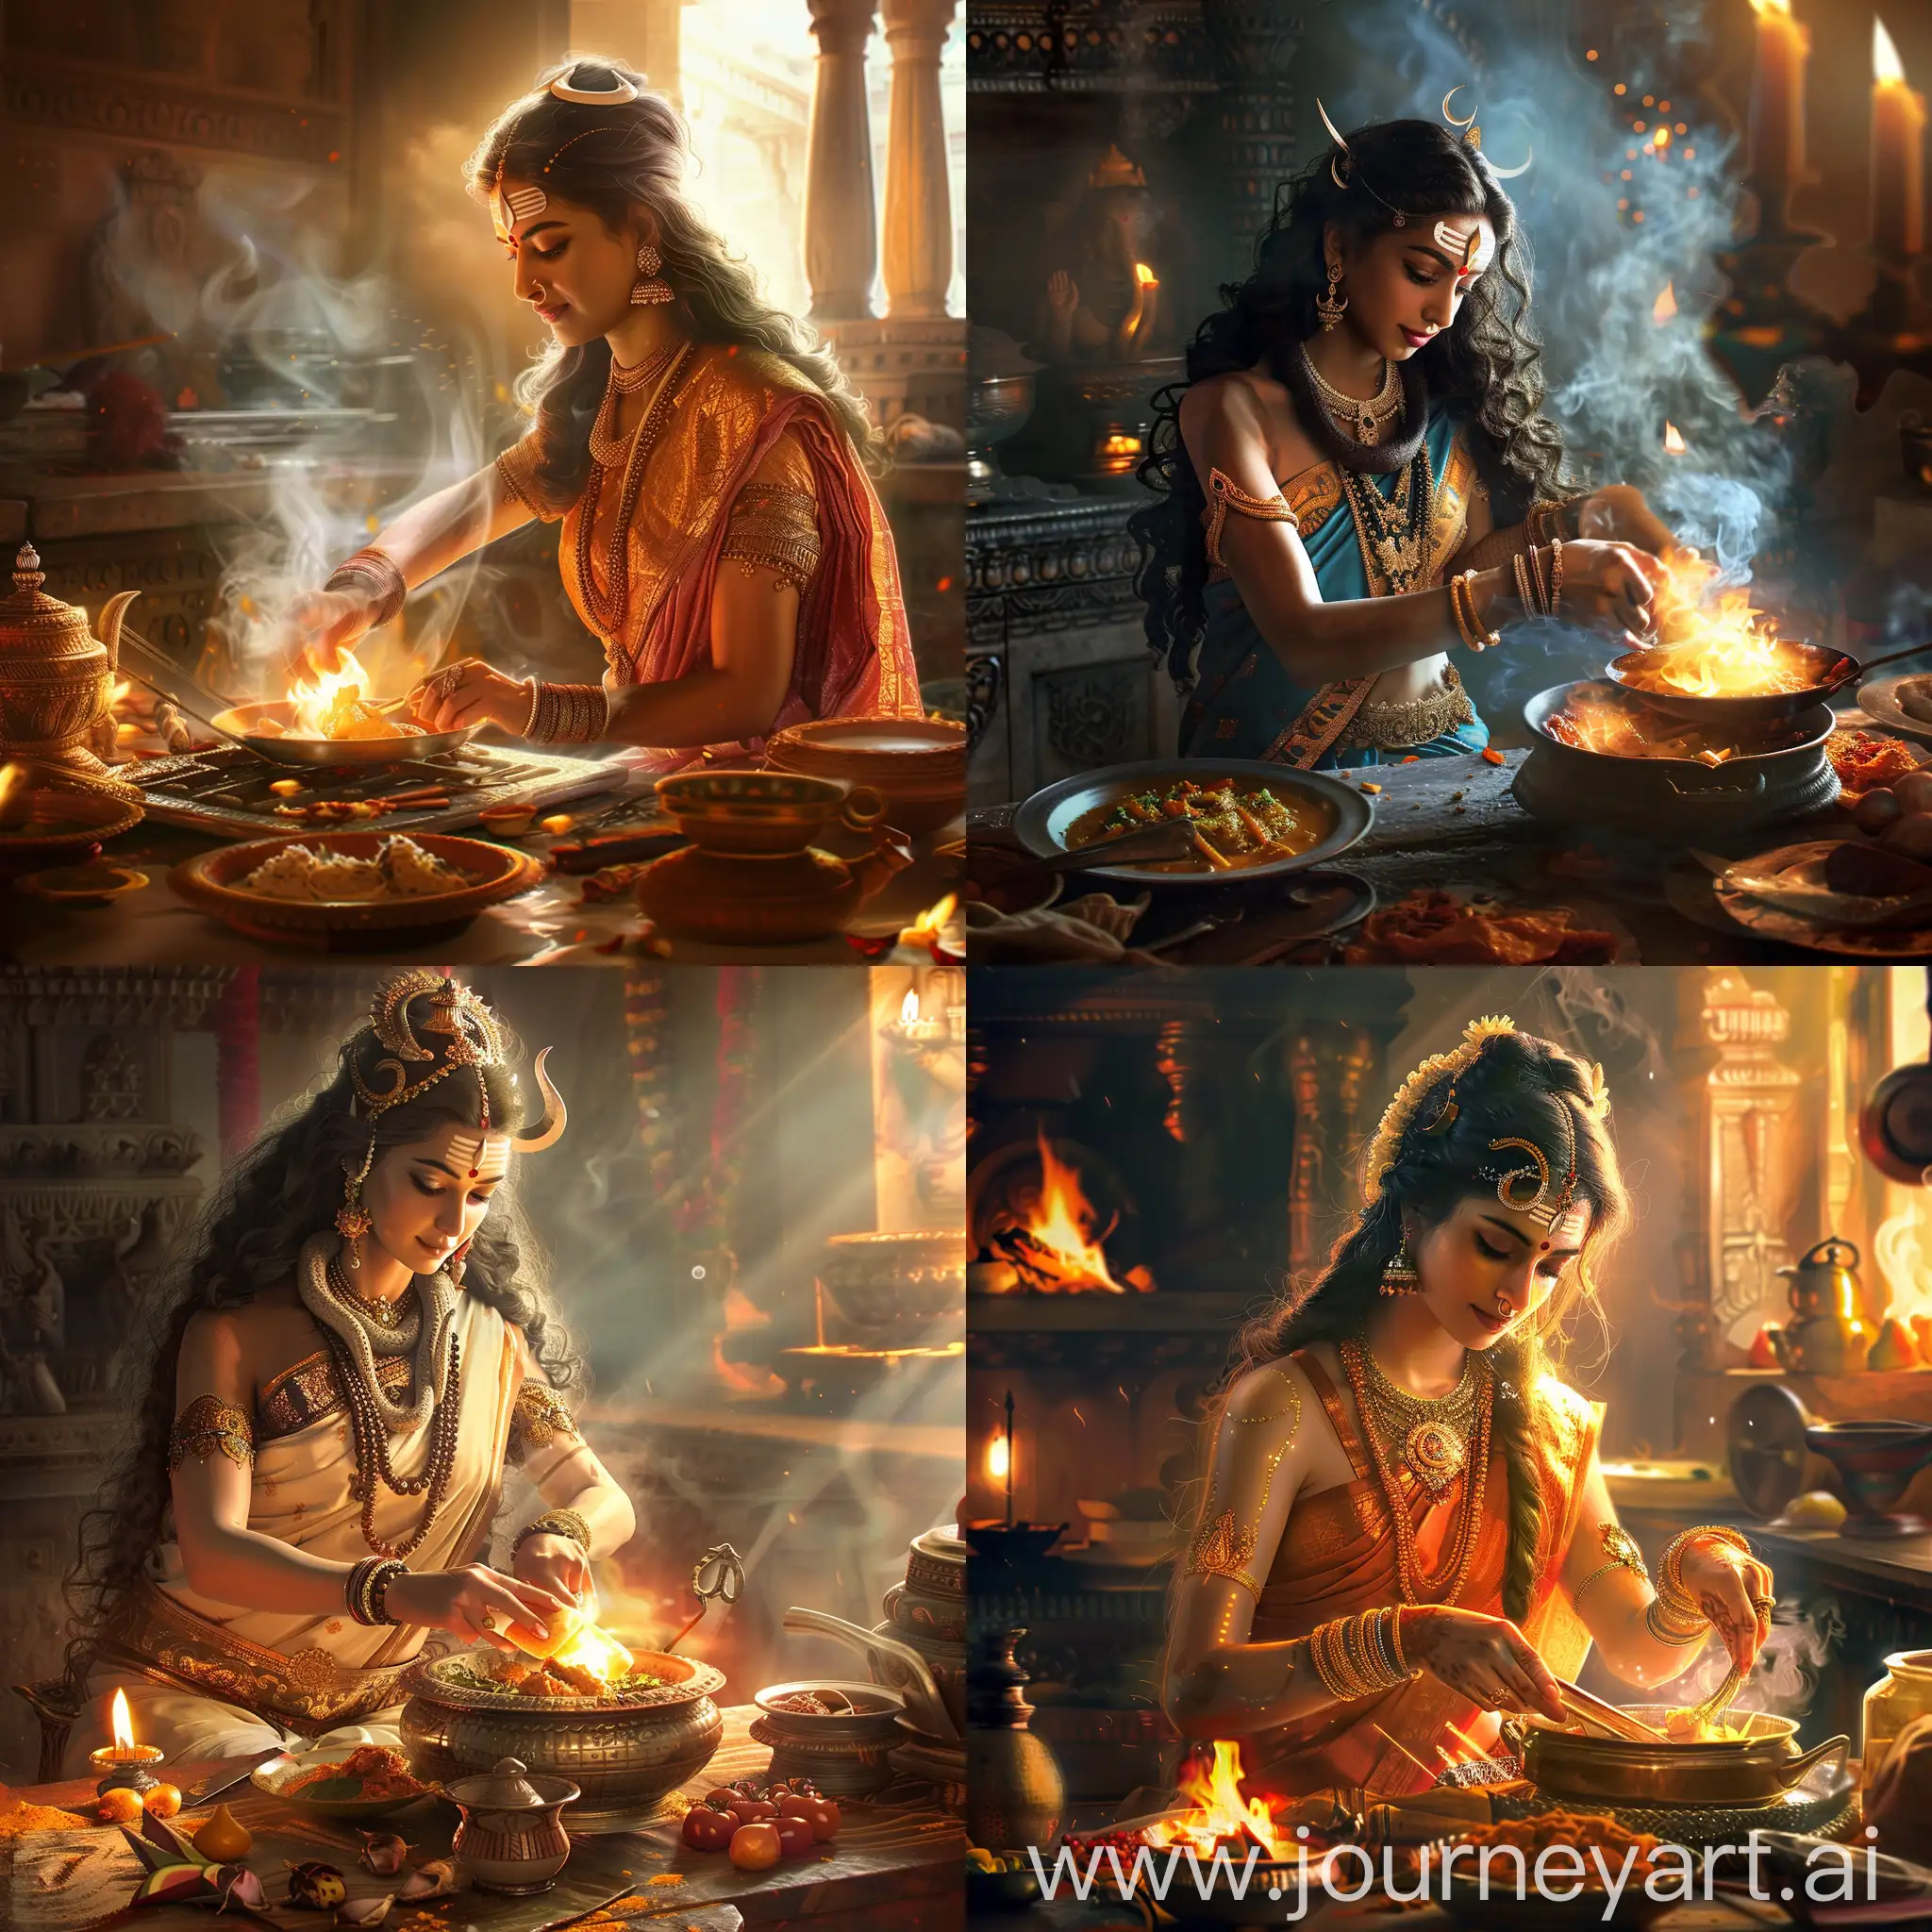 Divine-Scene-Goddess-Parvati-Cooking-for-Lord-Shiva-in-Radiant-Light